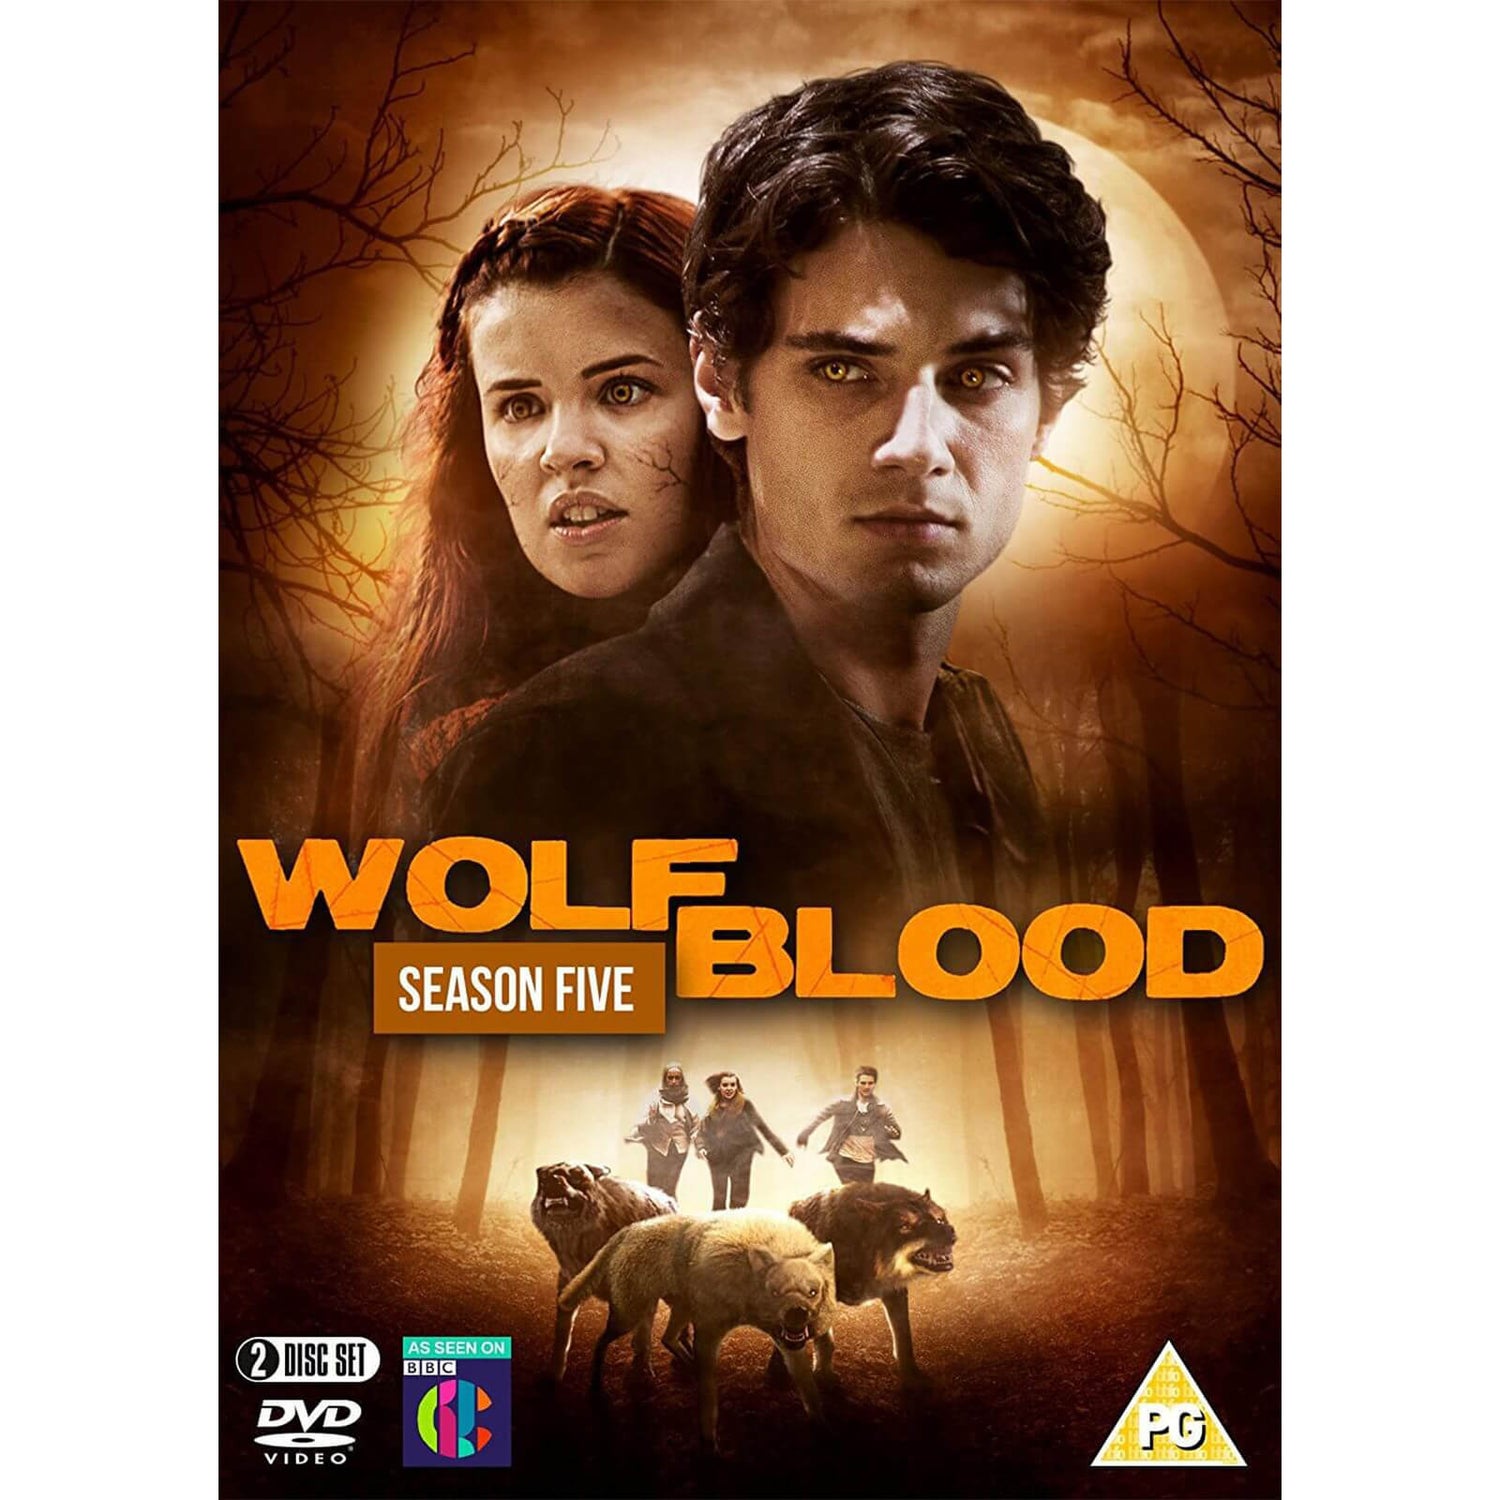 Vanding fossil symptom WolfBlood - Season 5 (BBC) DVD - Zavvi UK